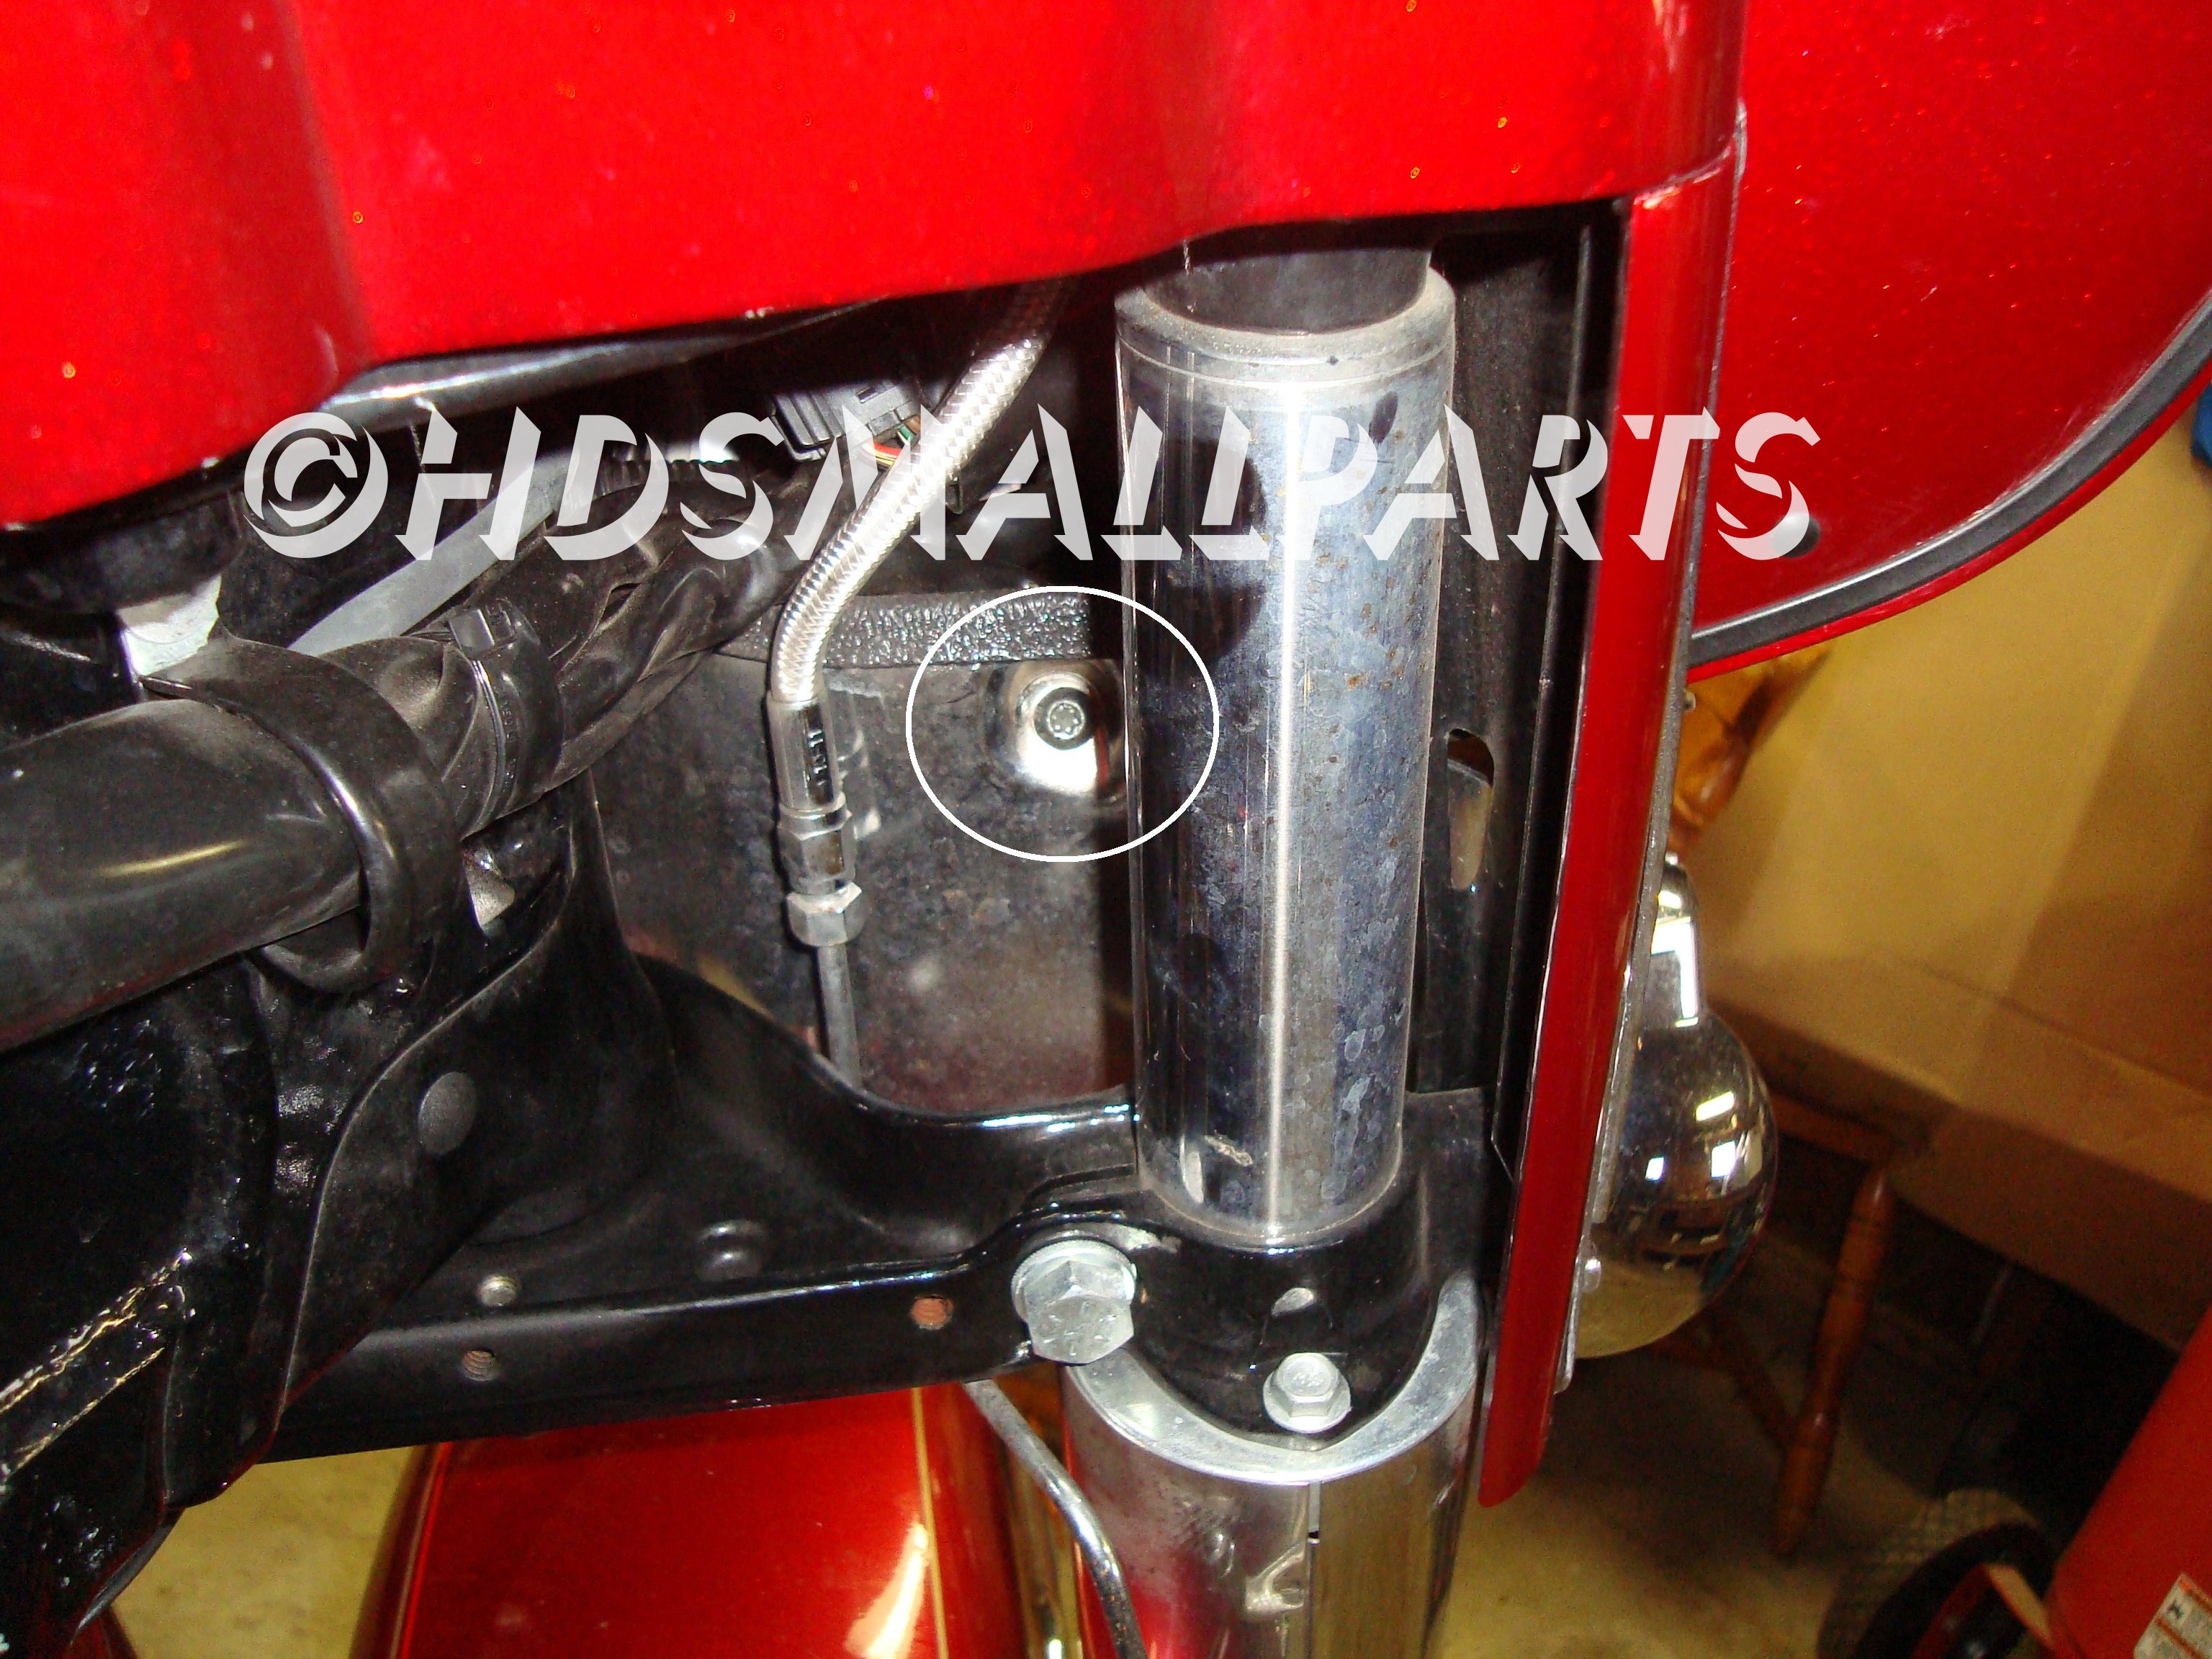 locezy - H-D Batwing Windshield/Fairing Repair Kit - Brass Inserts,(H-D Part# 16585-96) Stainless Steel Screws - HDsmallPARTS LLC - H-D Batwing Windshield/Fairing Repair Kit - Brass Inserts, Stainless Steel Screws